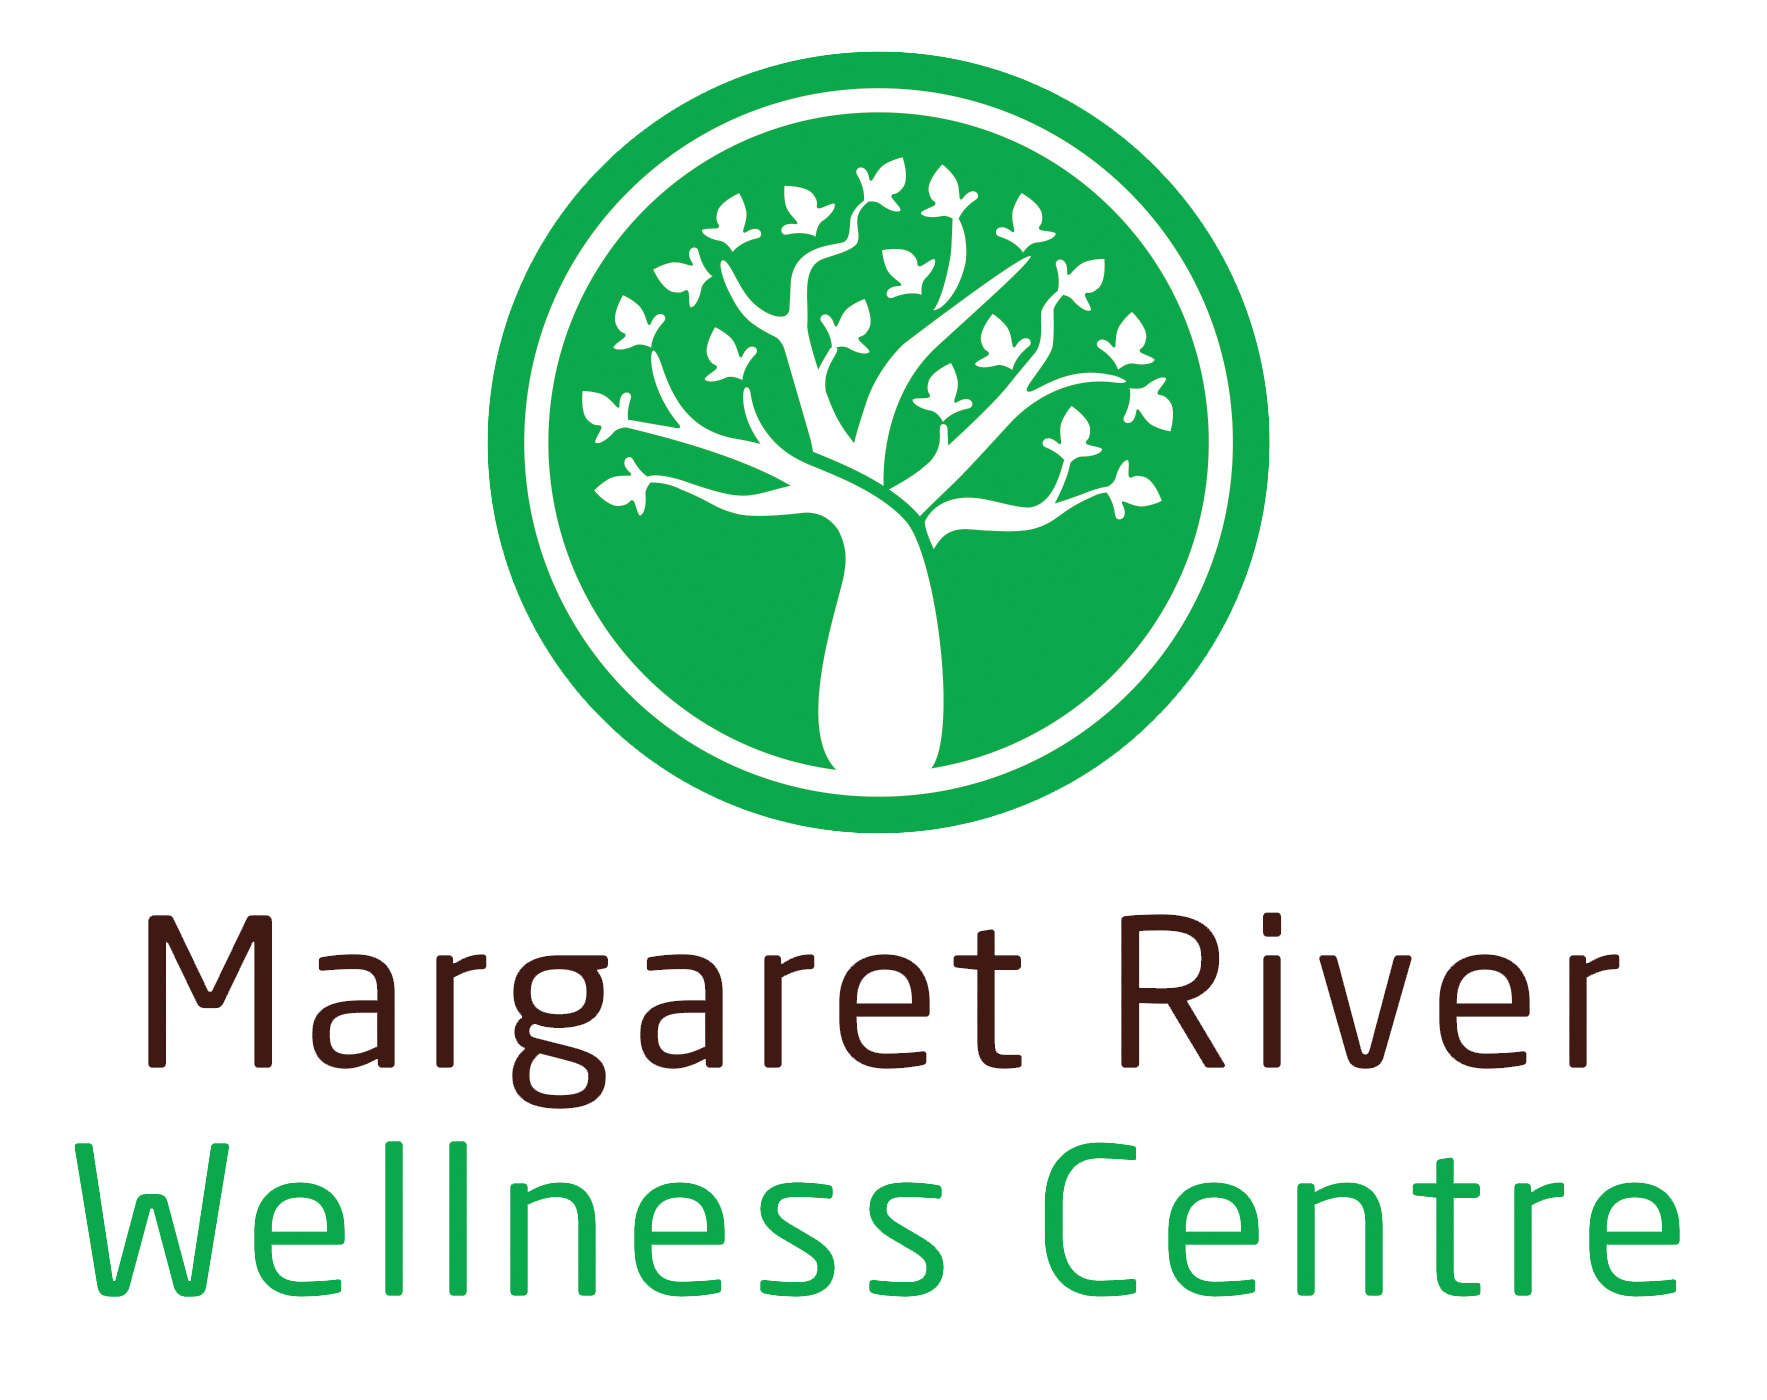 Margaret River Wellness Centre